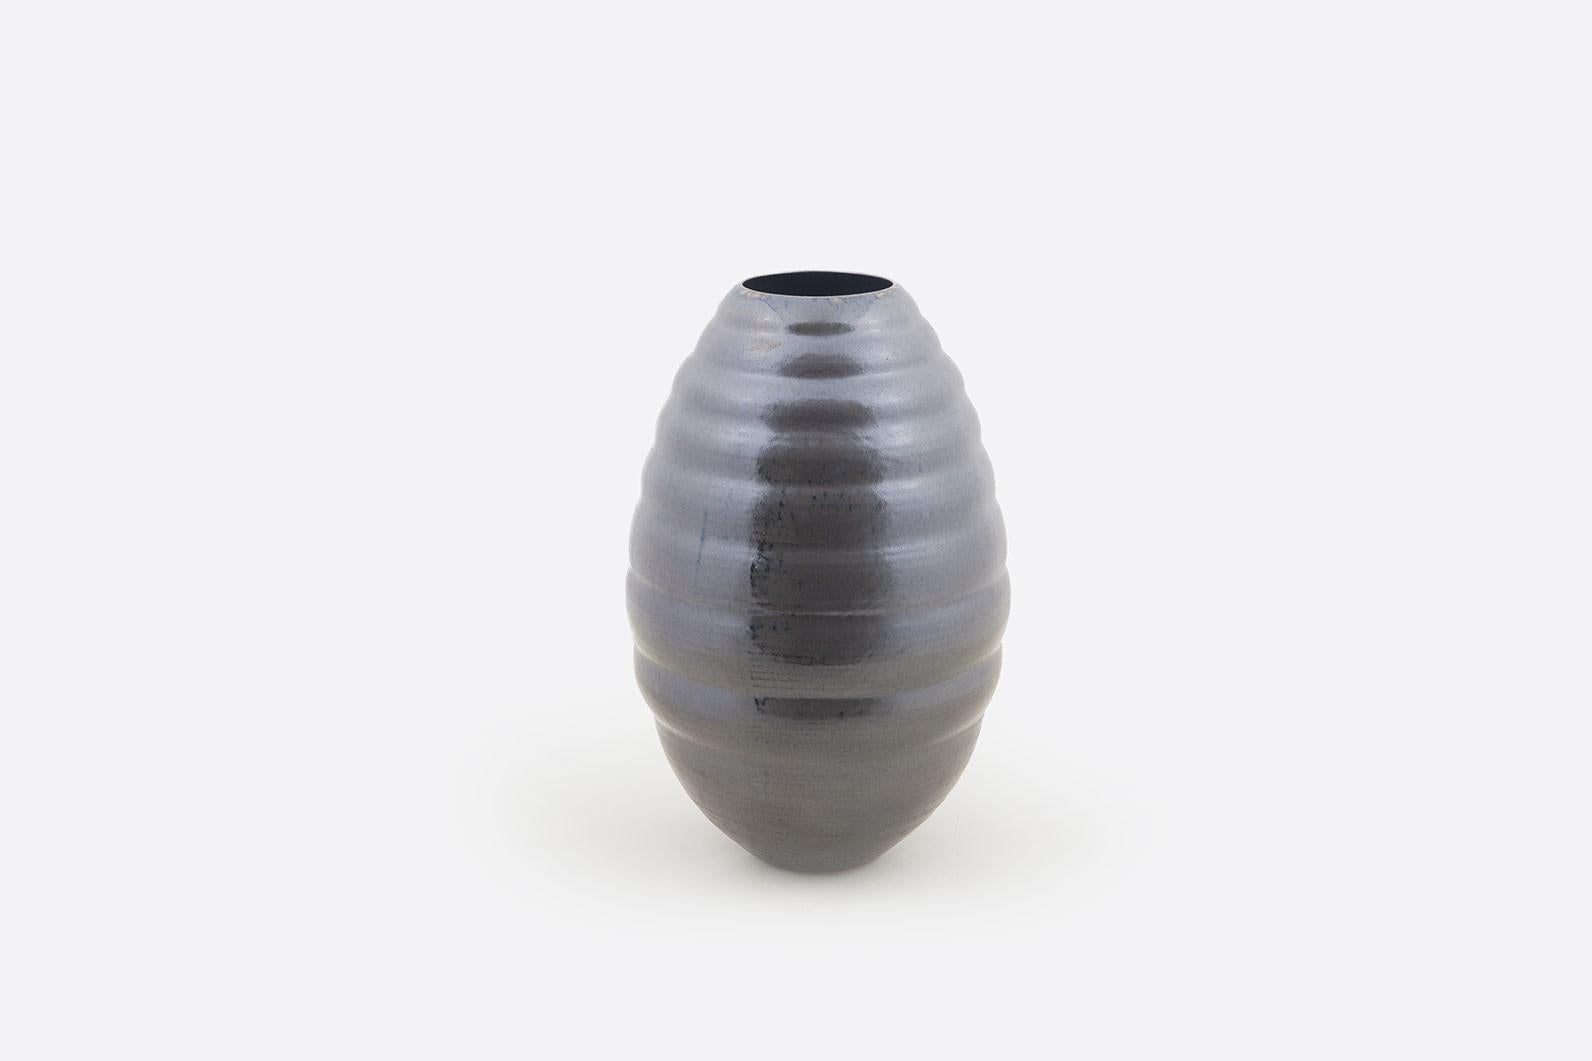 Organic Modern Black Ondulating Form, Ceramic Vase, Interior Sculpture or Vessel, Objet D'art